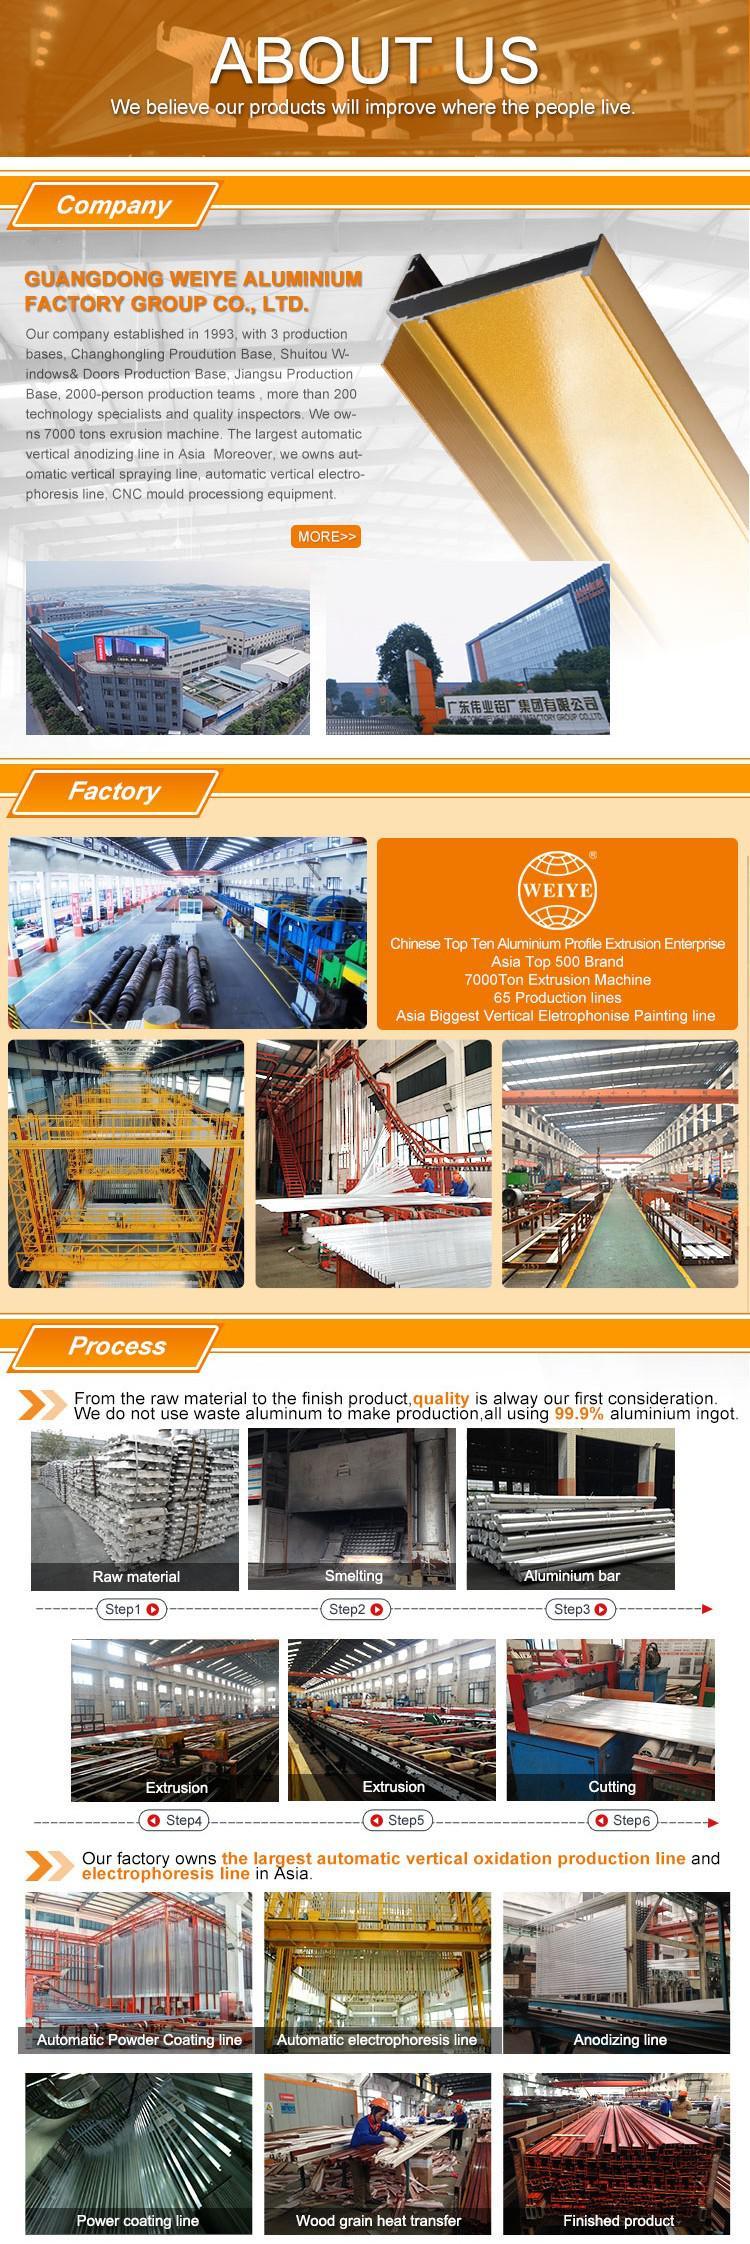 China Factory Aluminum Alloy Extrusion Profile Heatsink